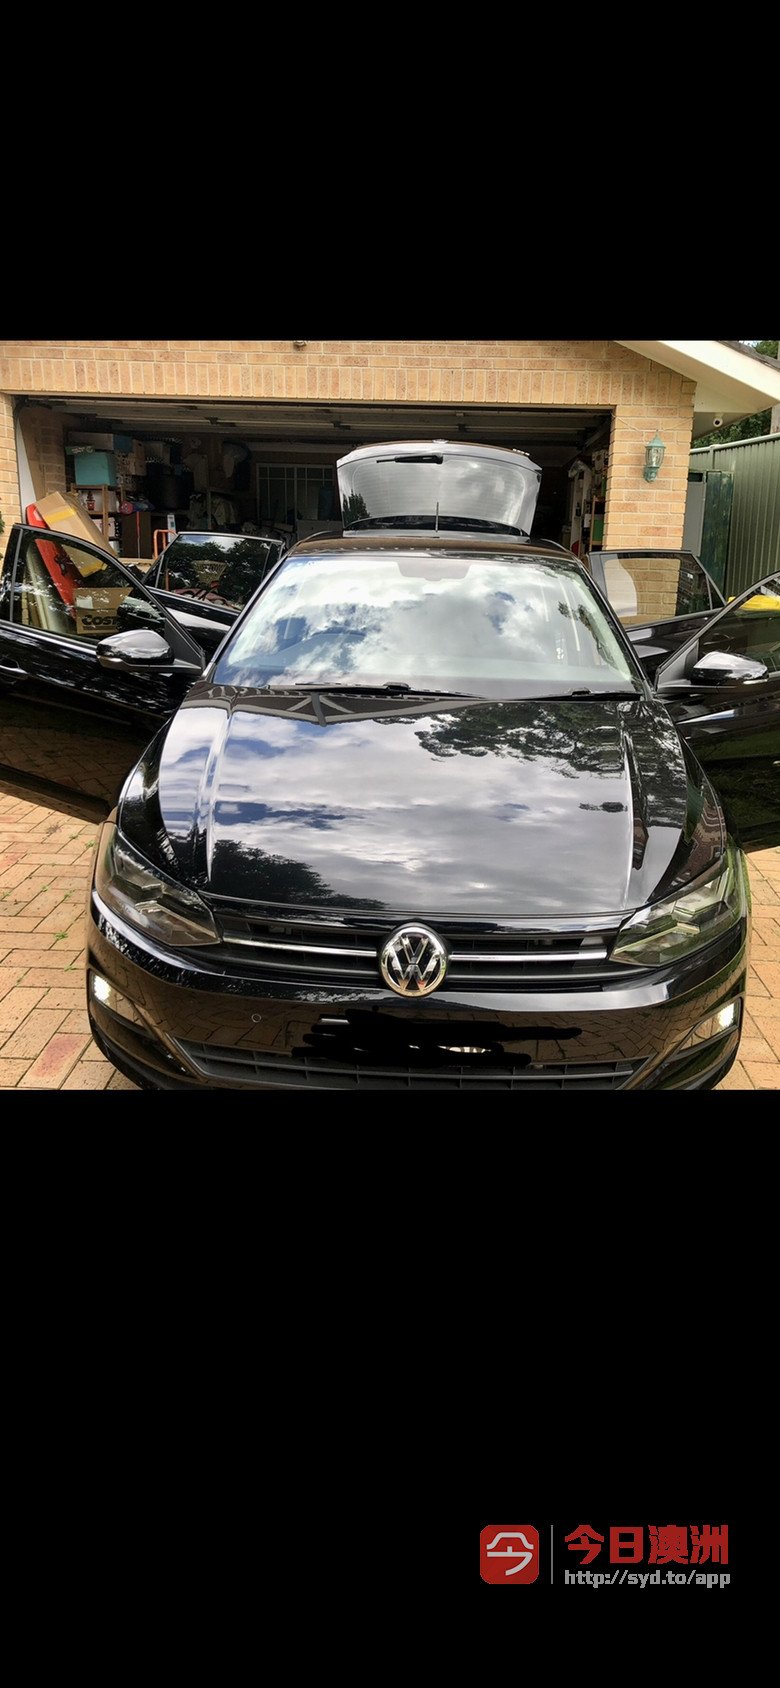 Volkswagen 2019年 Polo 14T 自动